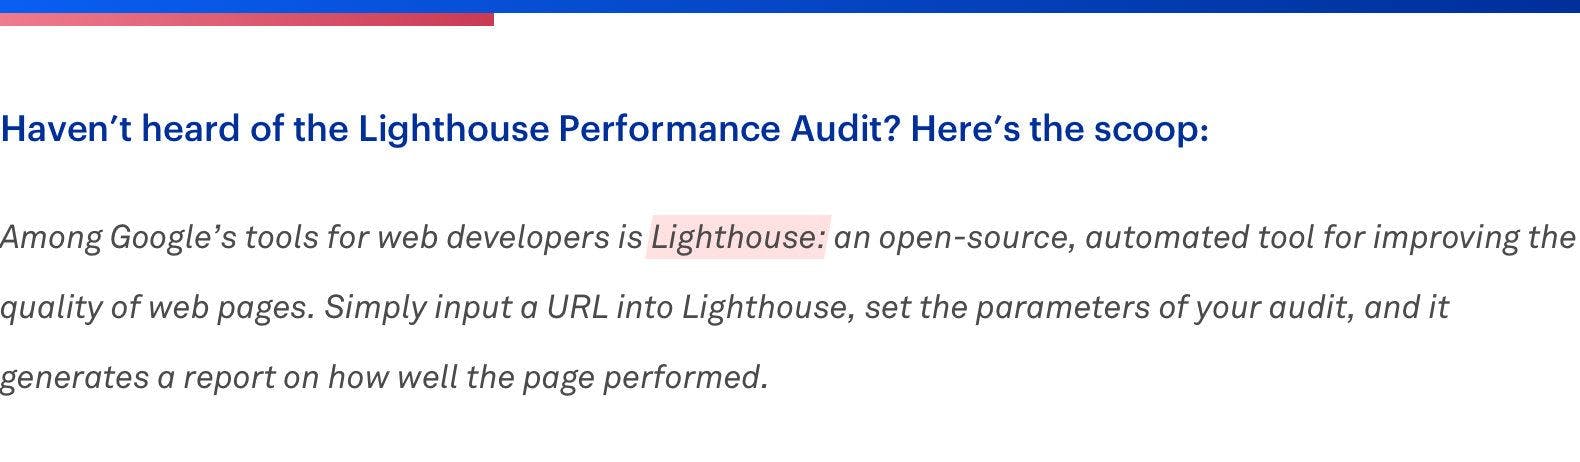 lighthouse performance audit